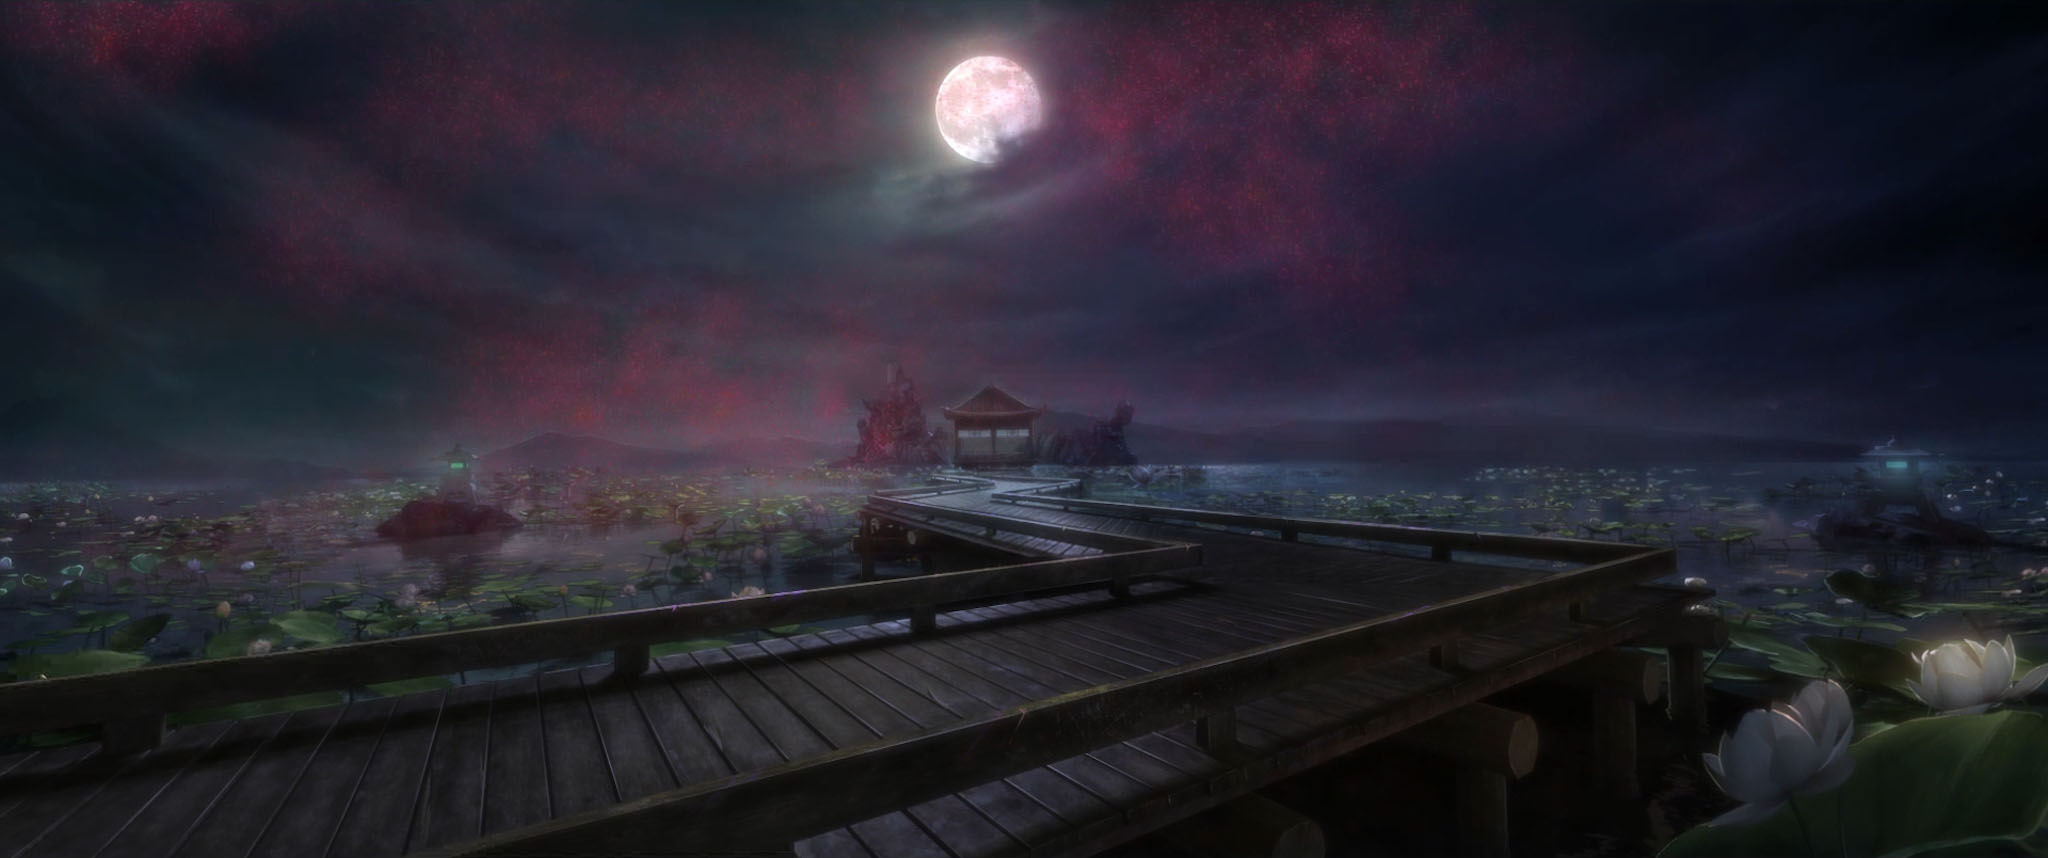 Lotus Pier under the full moon